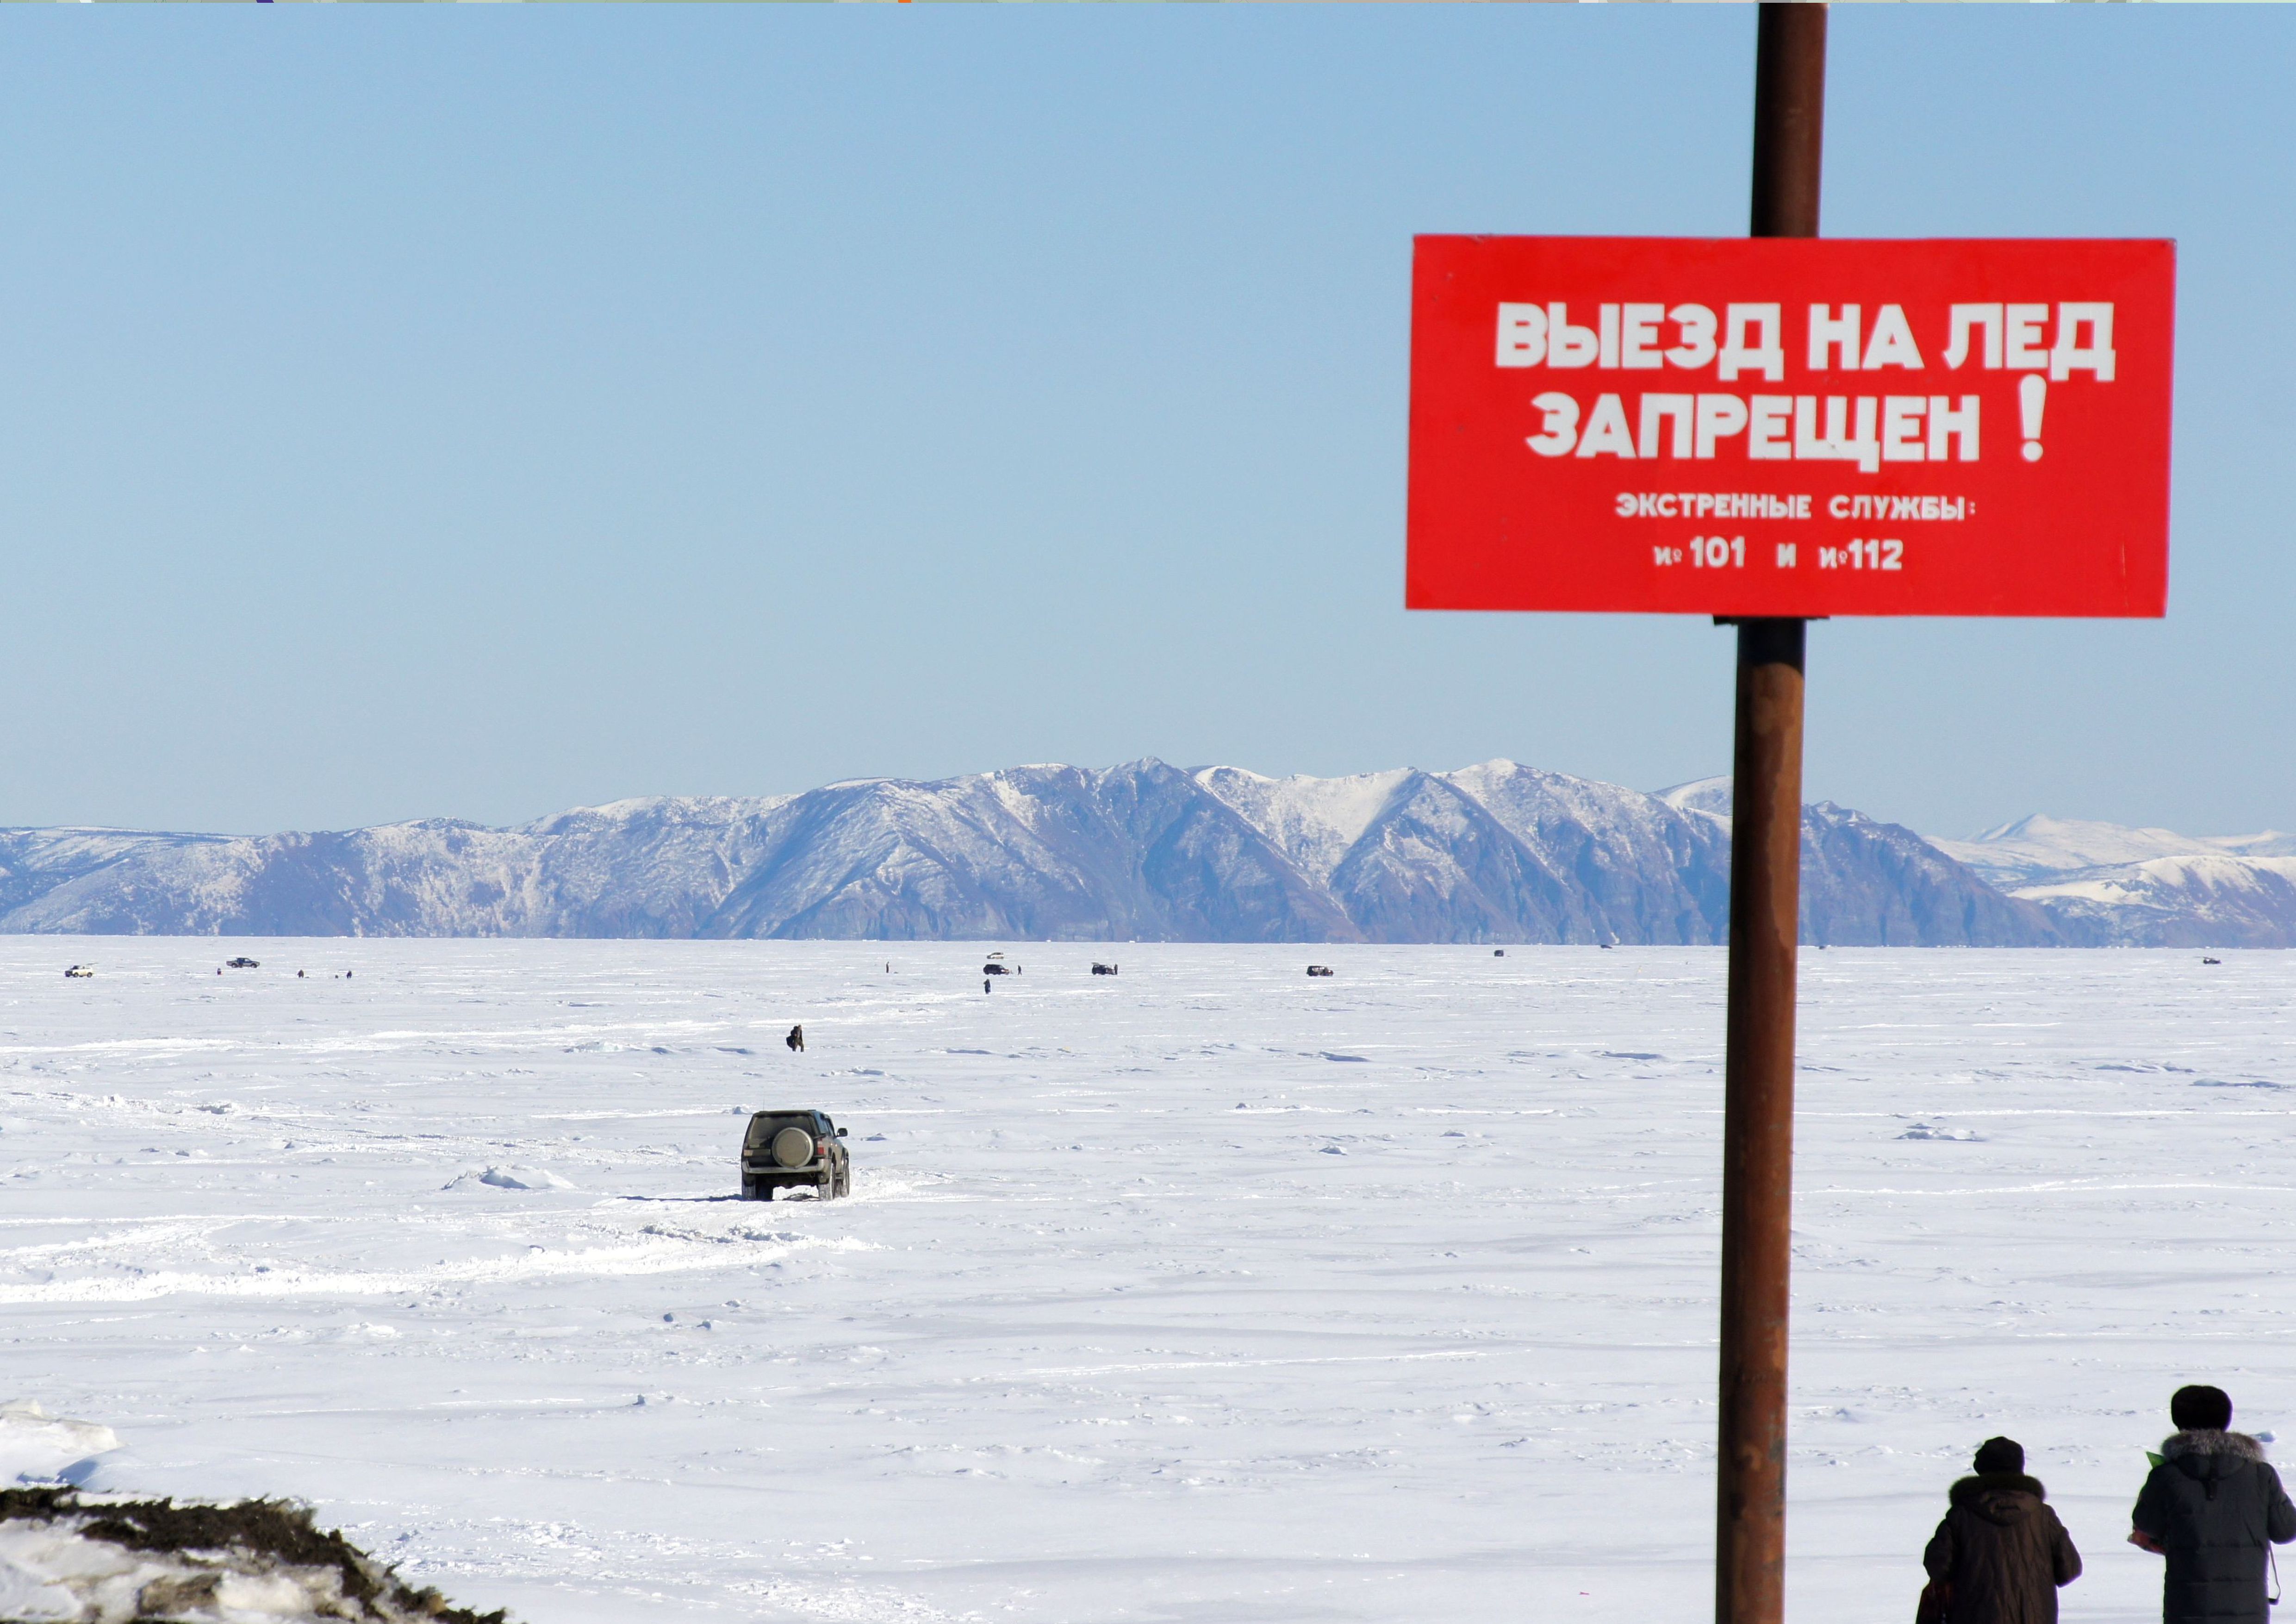 Выезд на лед запрещен